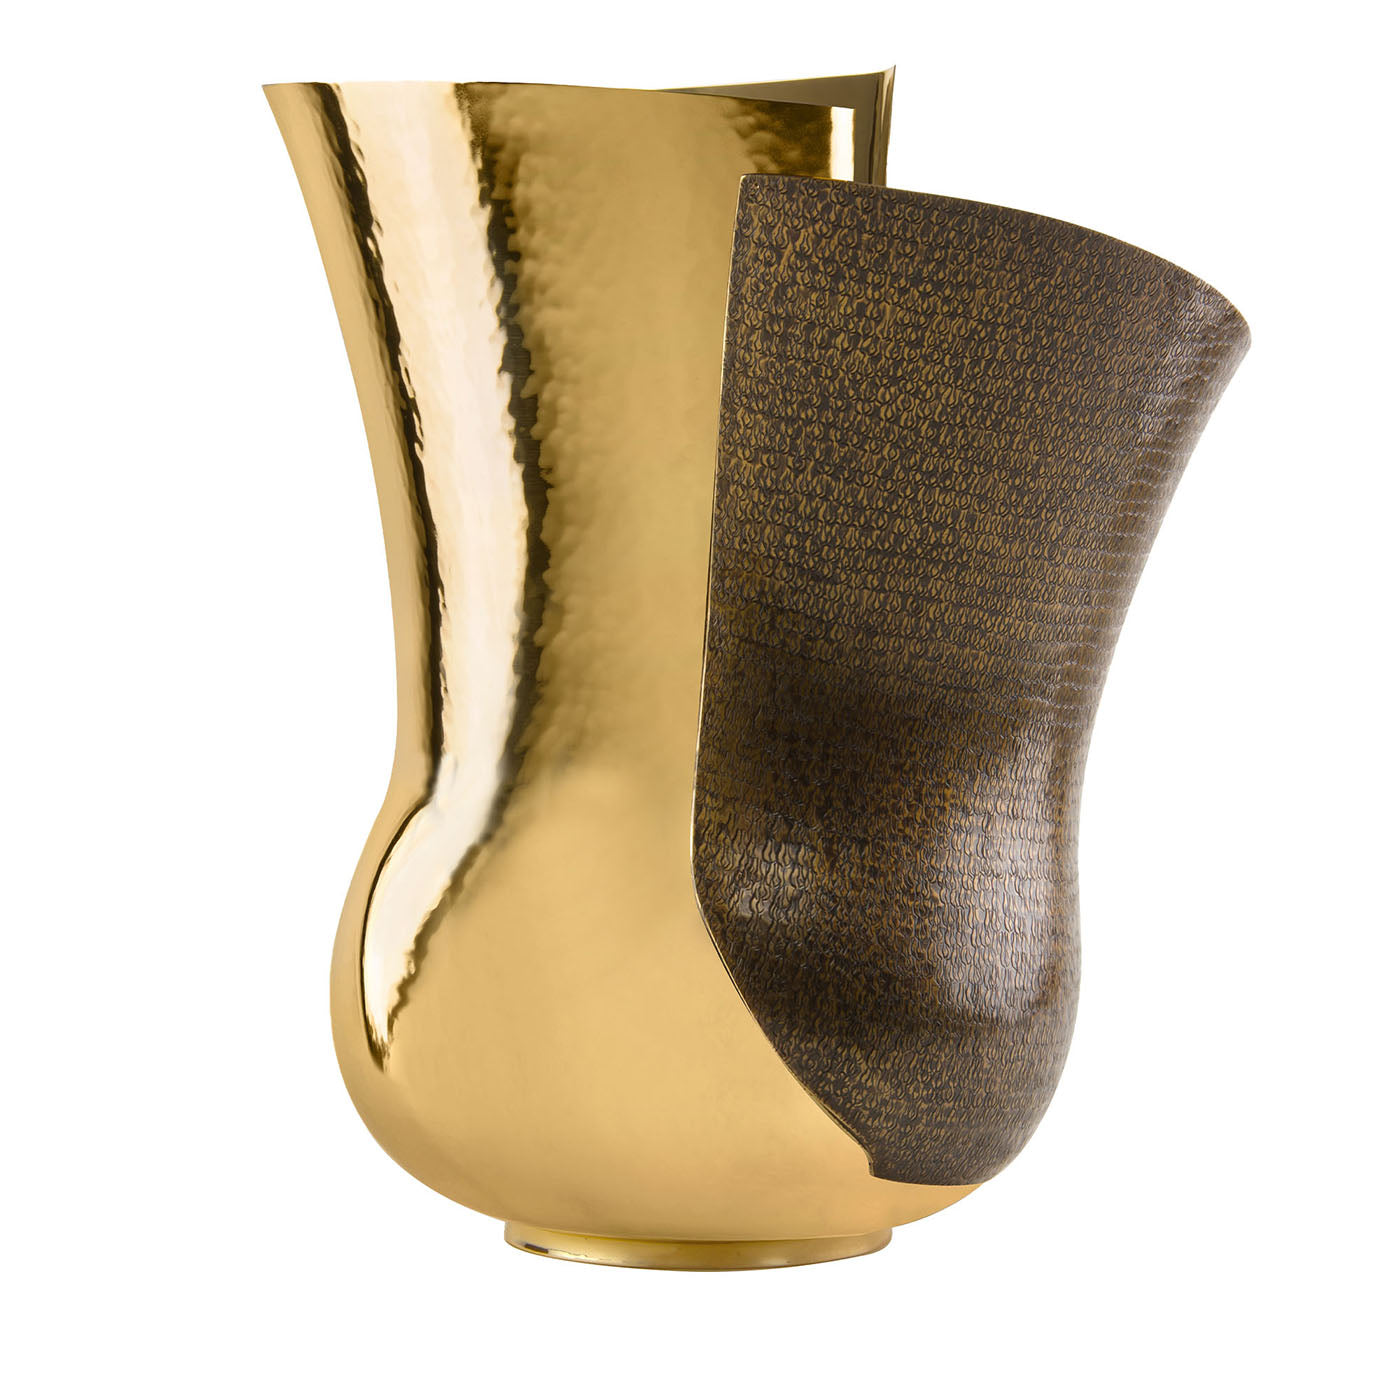 Florem Golden Vase by Riccardo Erata - Main view